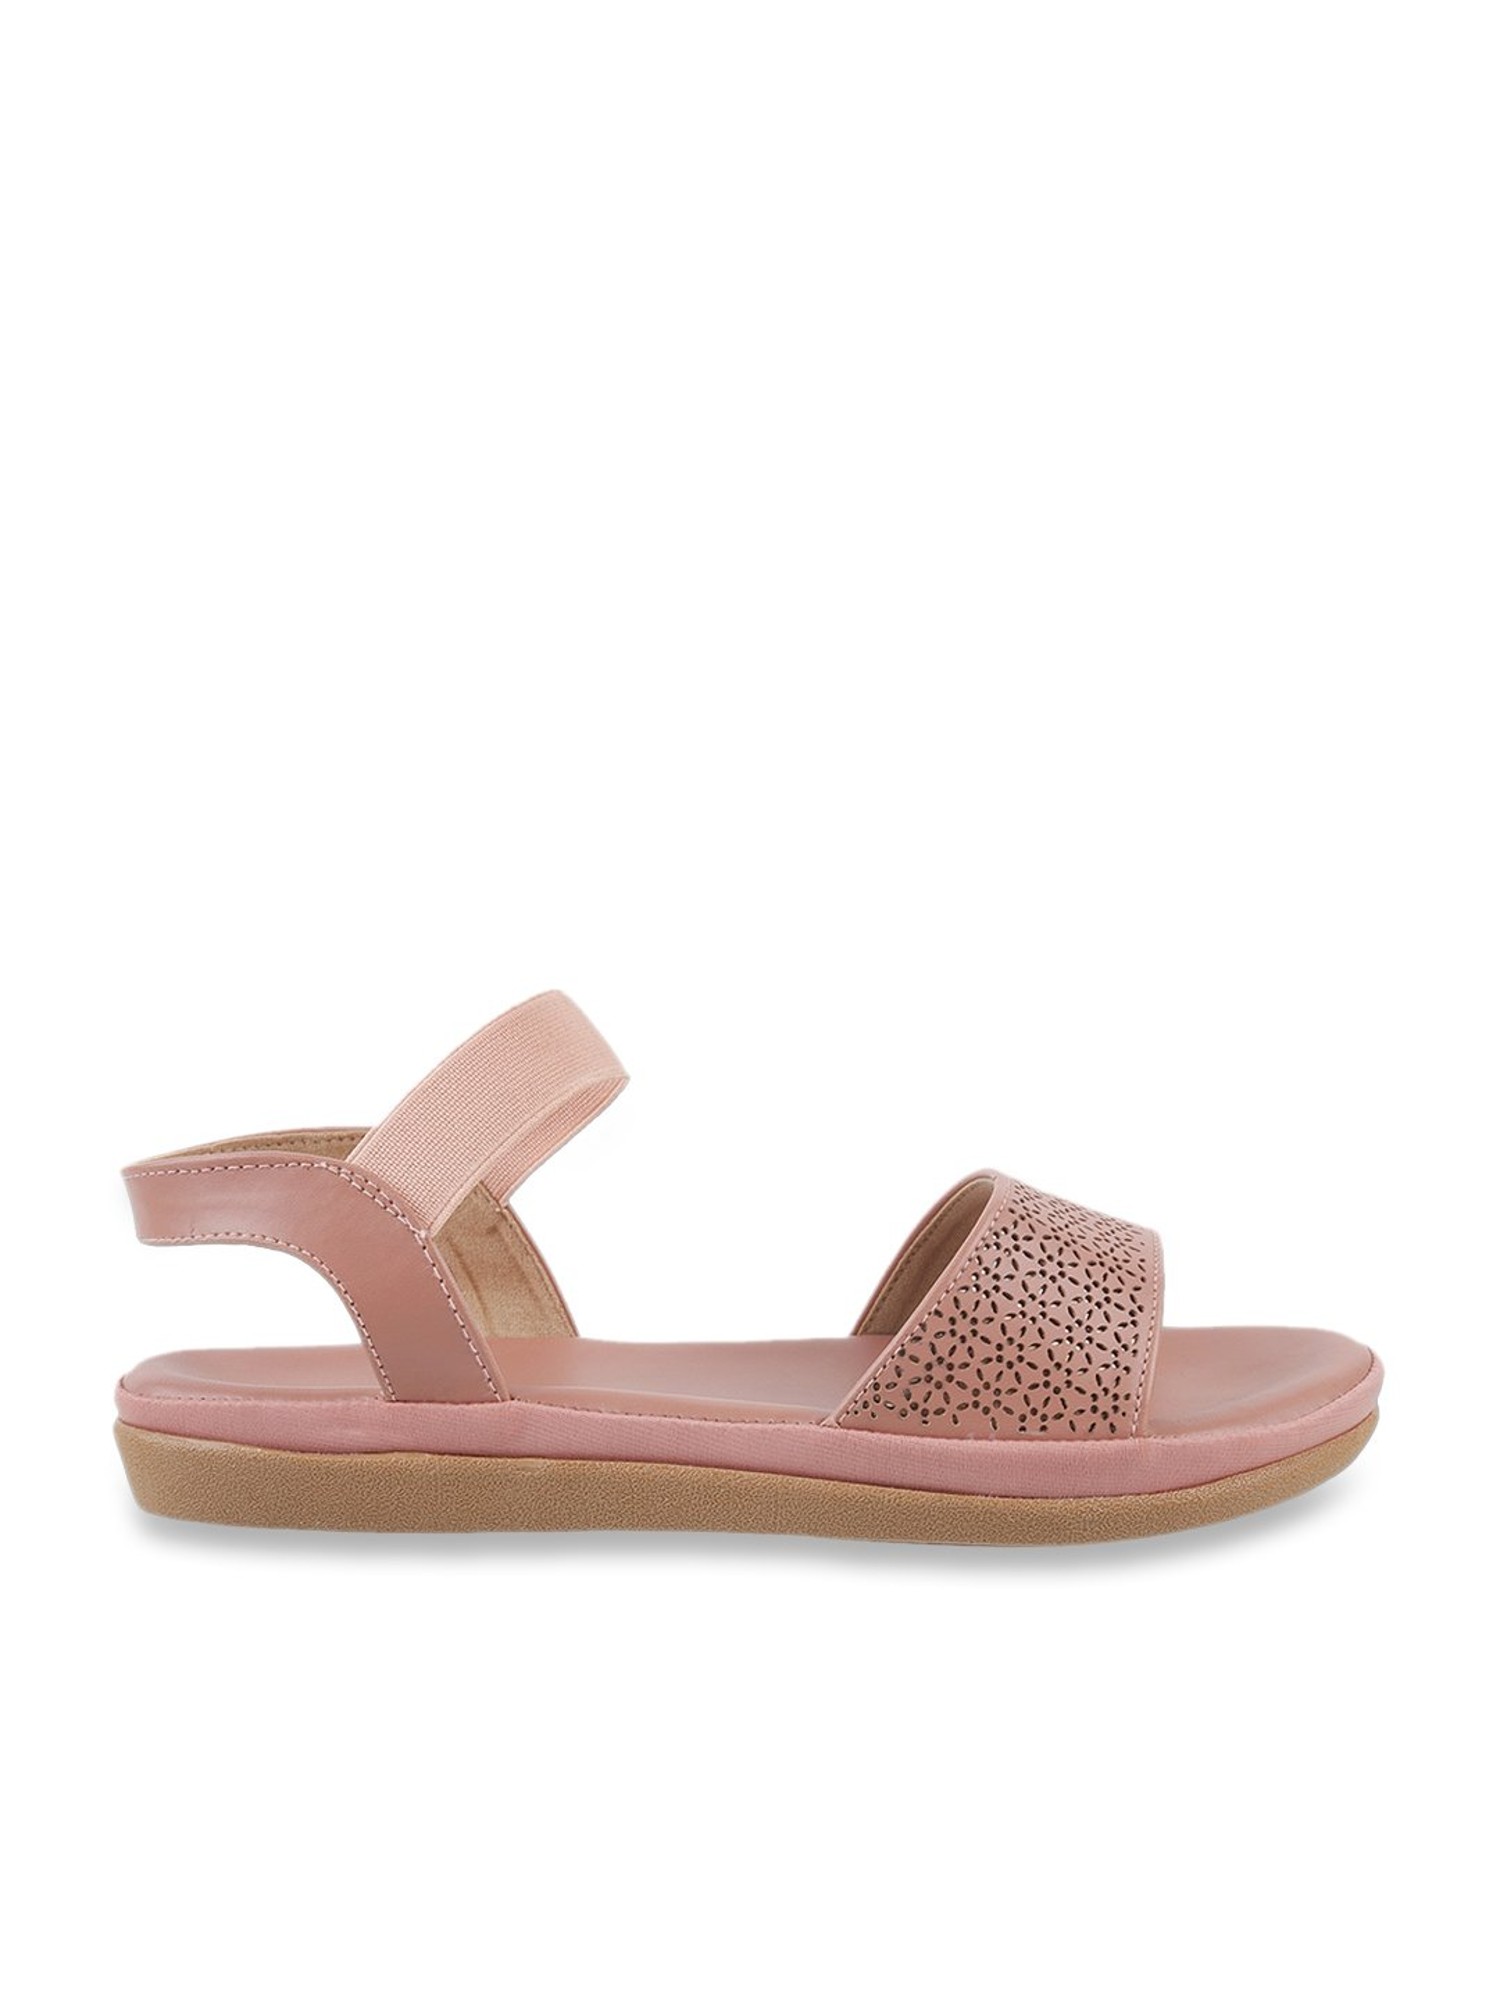 Iconics Sandals  Buy Iconics Women Peach Comfort Flat Sandals Online   Nykaa Fashion